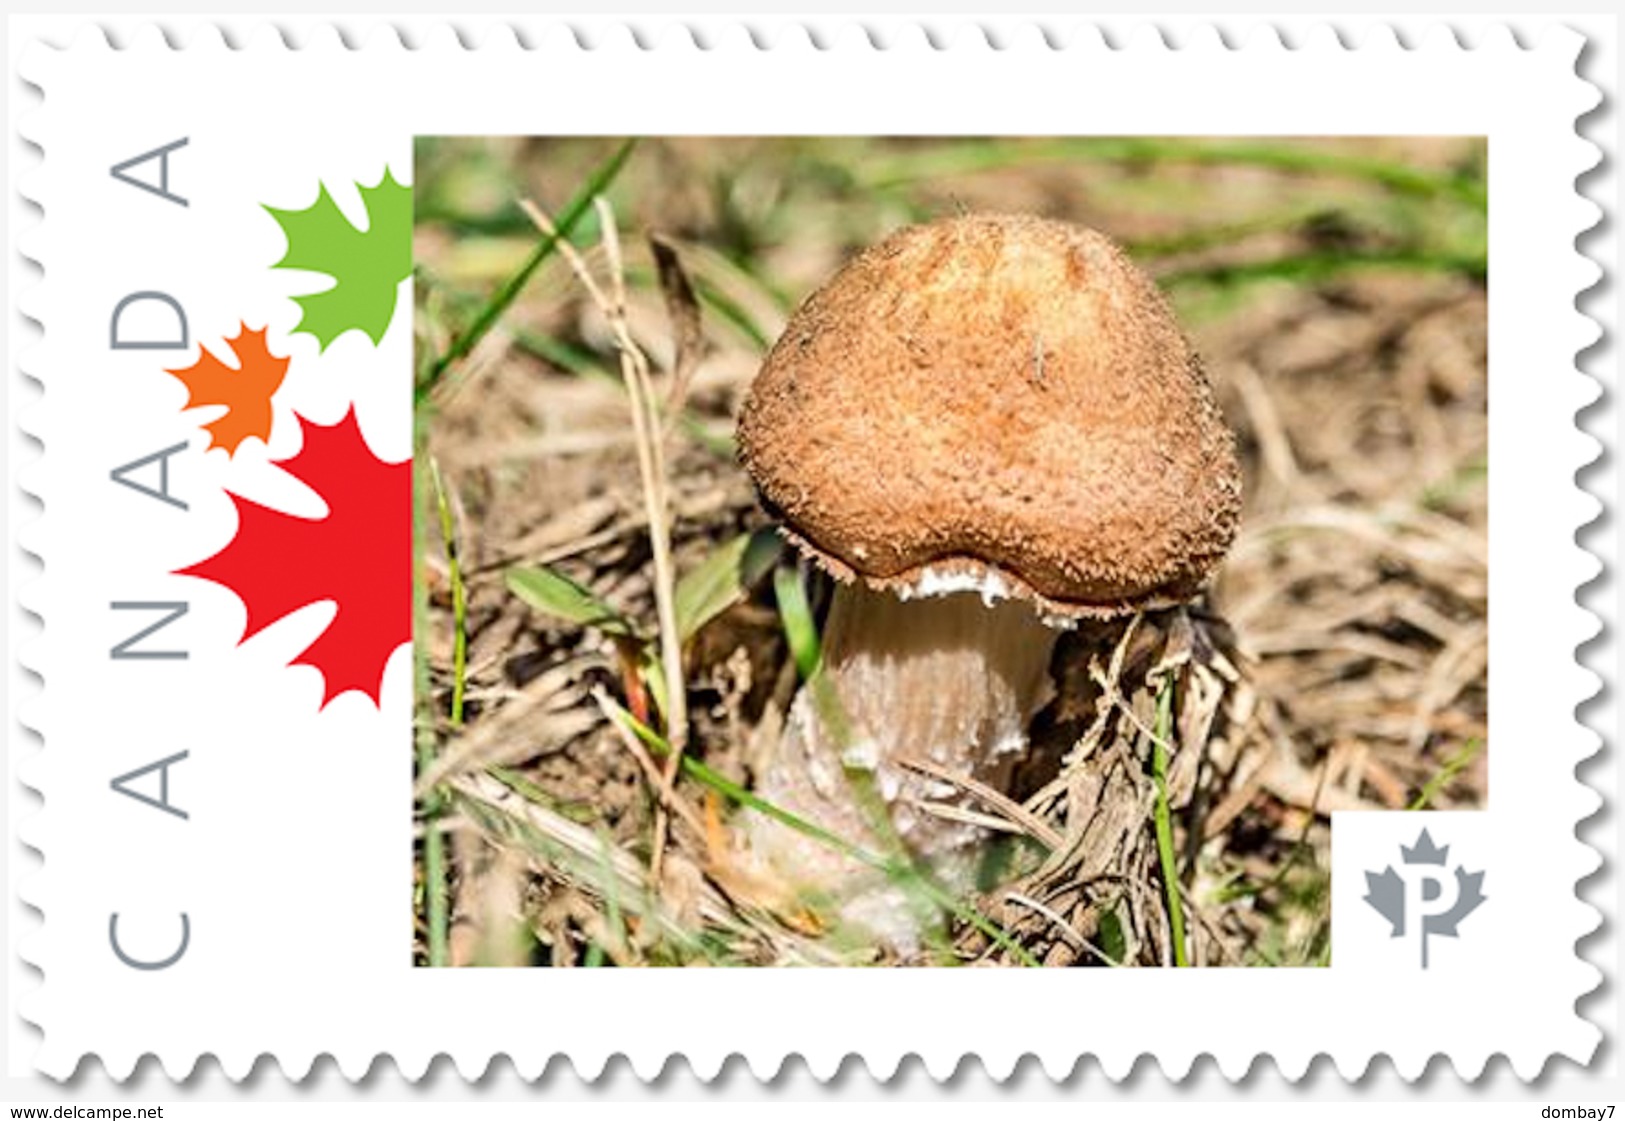 YOUNG MUSHROOM, PILZ, SETA CHAMPIGNON, FUNGO, Personalized Postage Stamp MNH Canada 2018 P18-06sn06 - Mushrooms